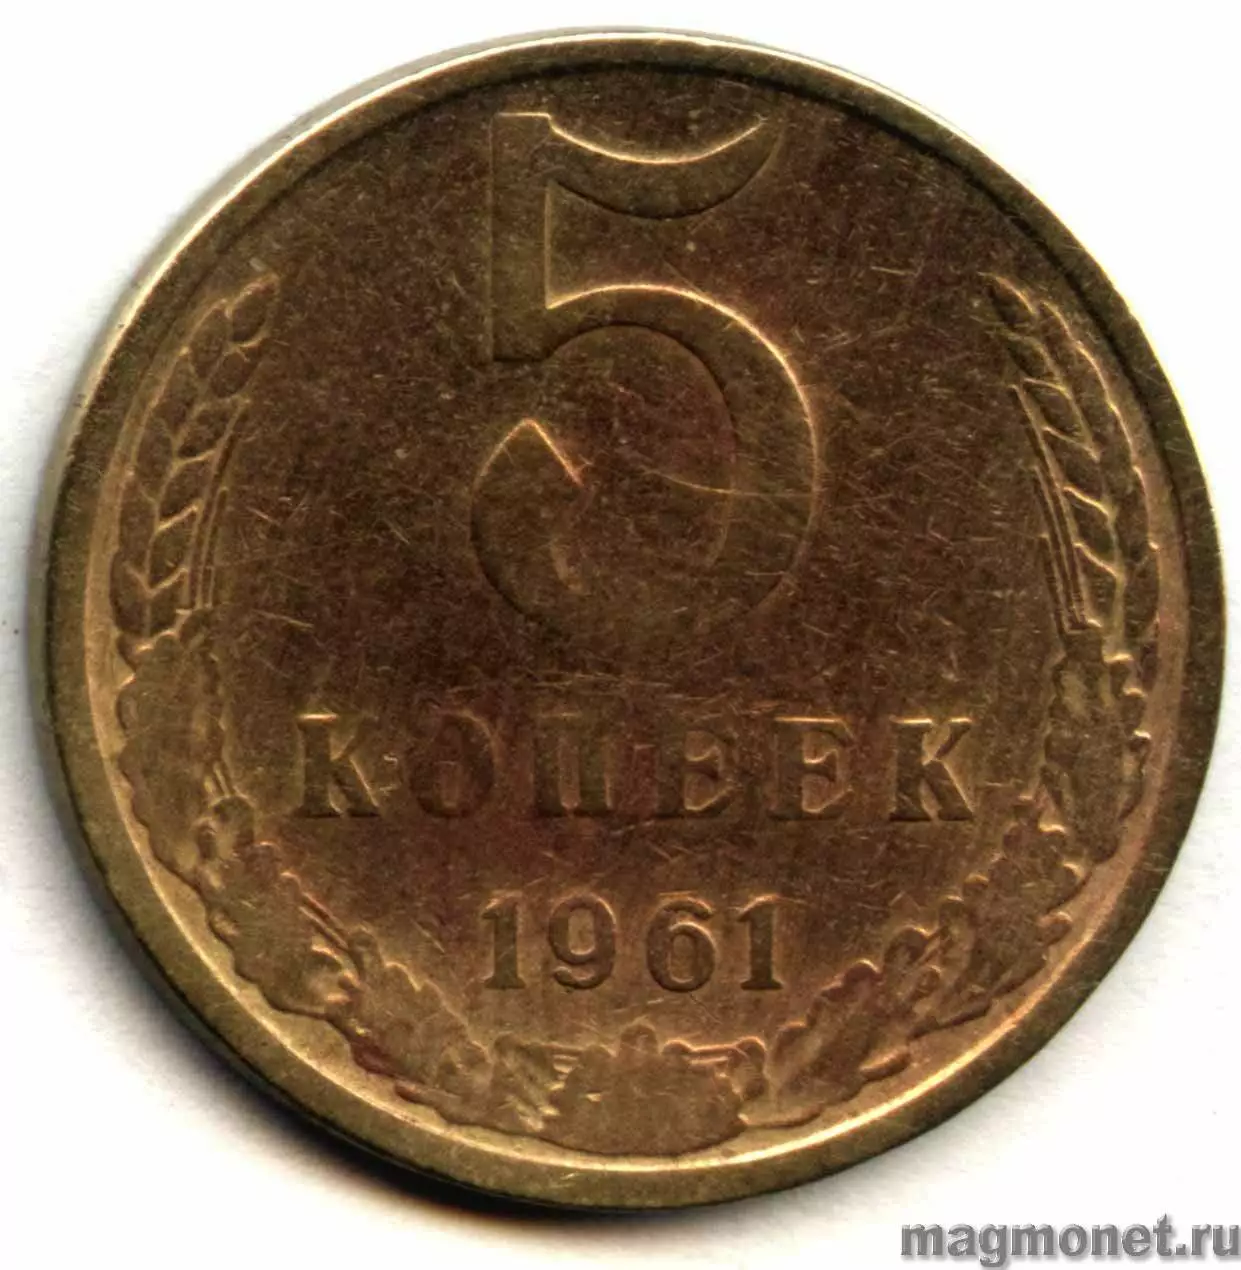 Цена 5 копеек 1961 ссср. 5 Копеек 1961 СССР. Монета 5 копеек СССР. 5 Копеек 1961 года. Пять копеек СССР 1961.